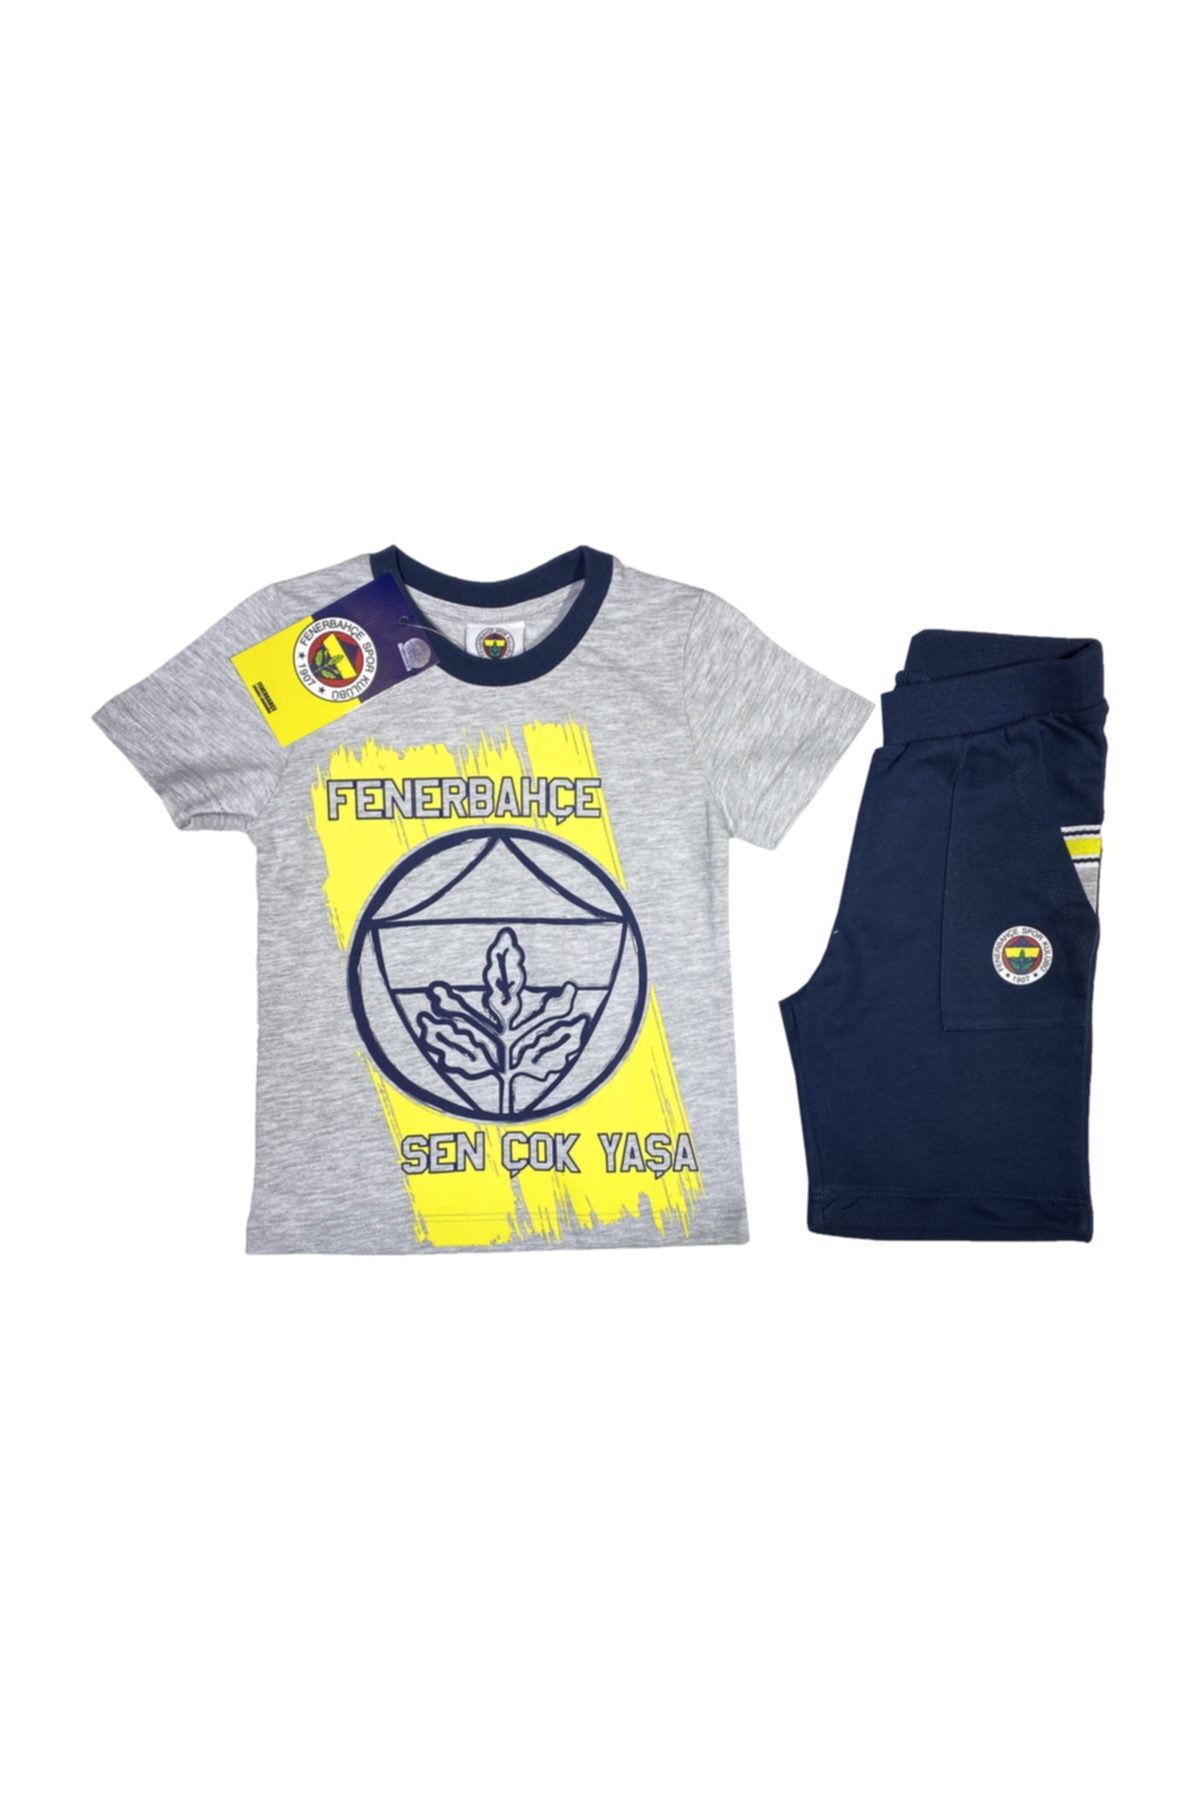 Fenerbahçe Erkek Fenerbahçe T-shirt Takım  Fb2158